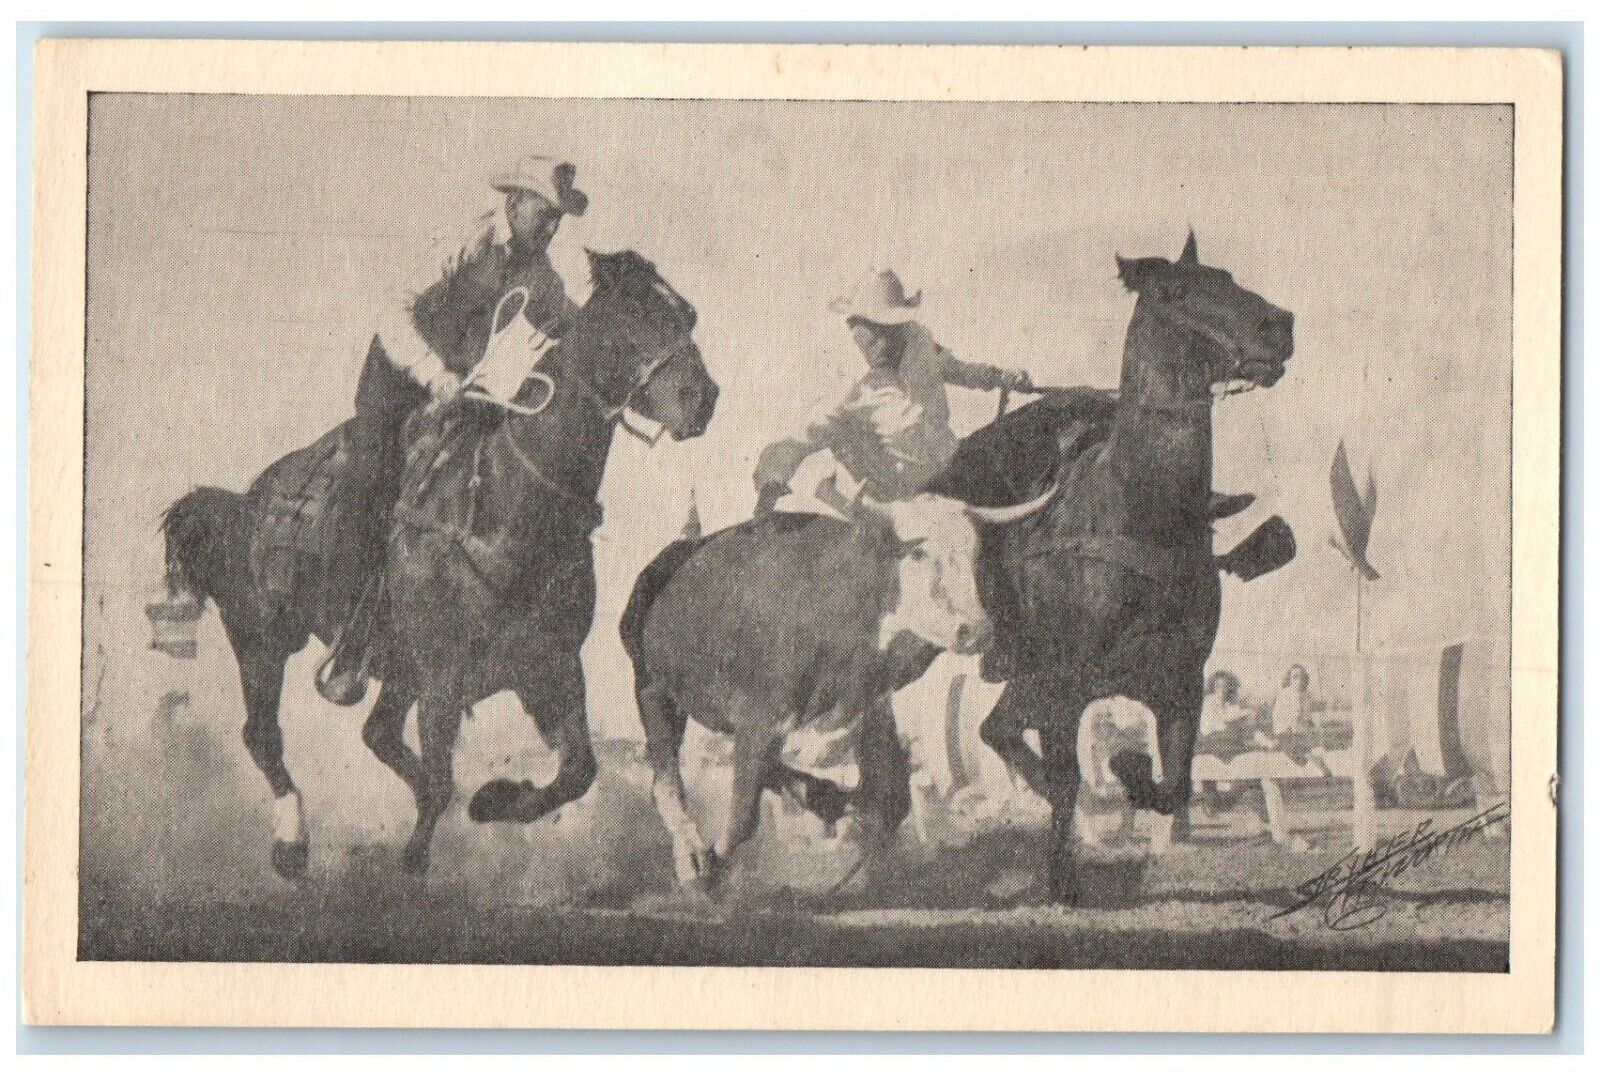 1941 Iowa's Championship Rodeo Horse Cowboy Contest Sidney Iowa Vintage Postcard